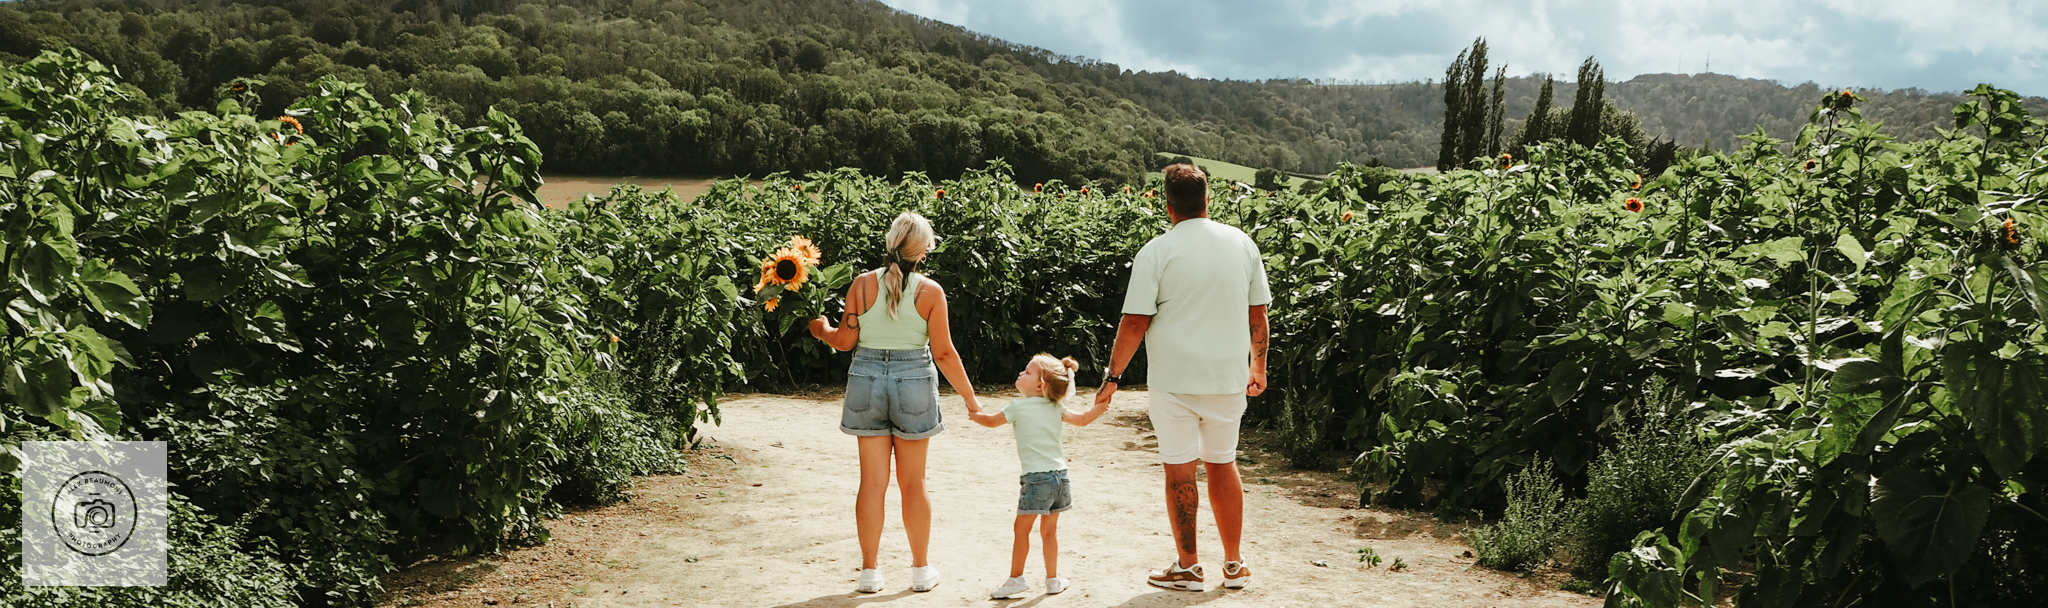 A Family Photoshoot Among Sunflowers